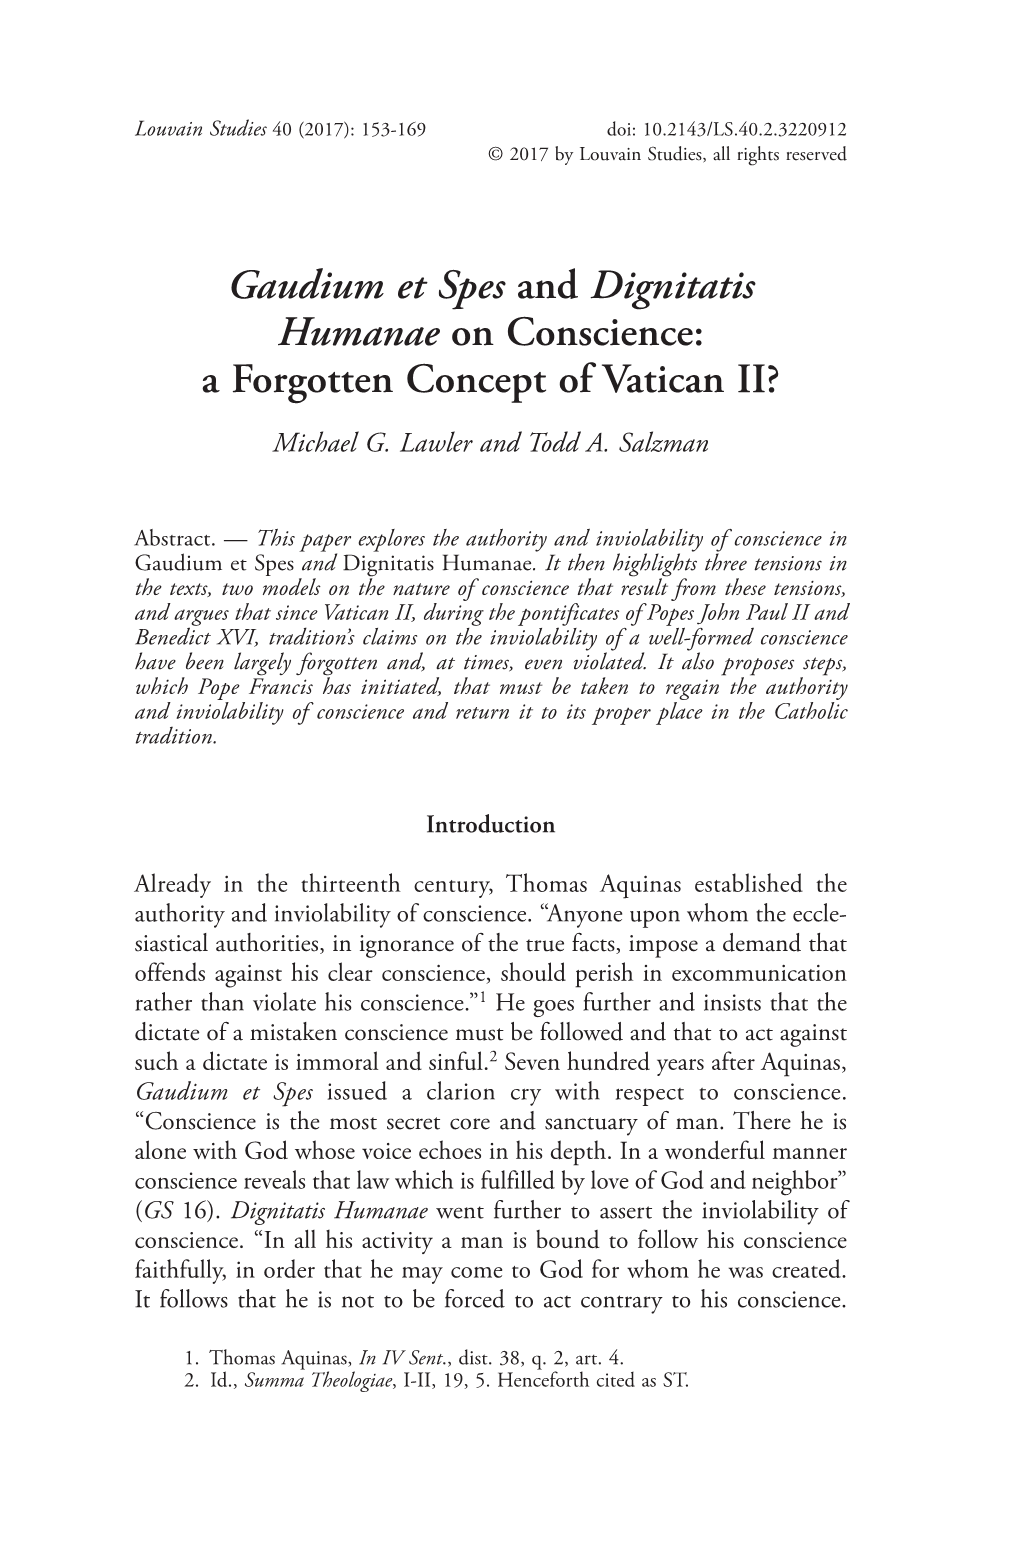 Gaudium Et Spes and Dignitatis Humanae on Conscience: a Forgotten Concept of Vatican II?